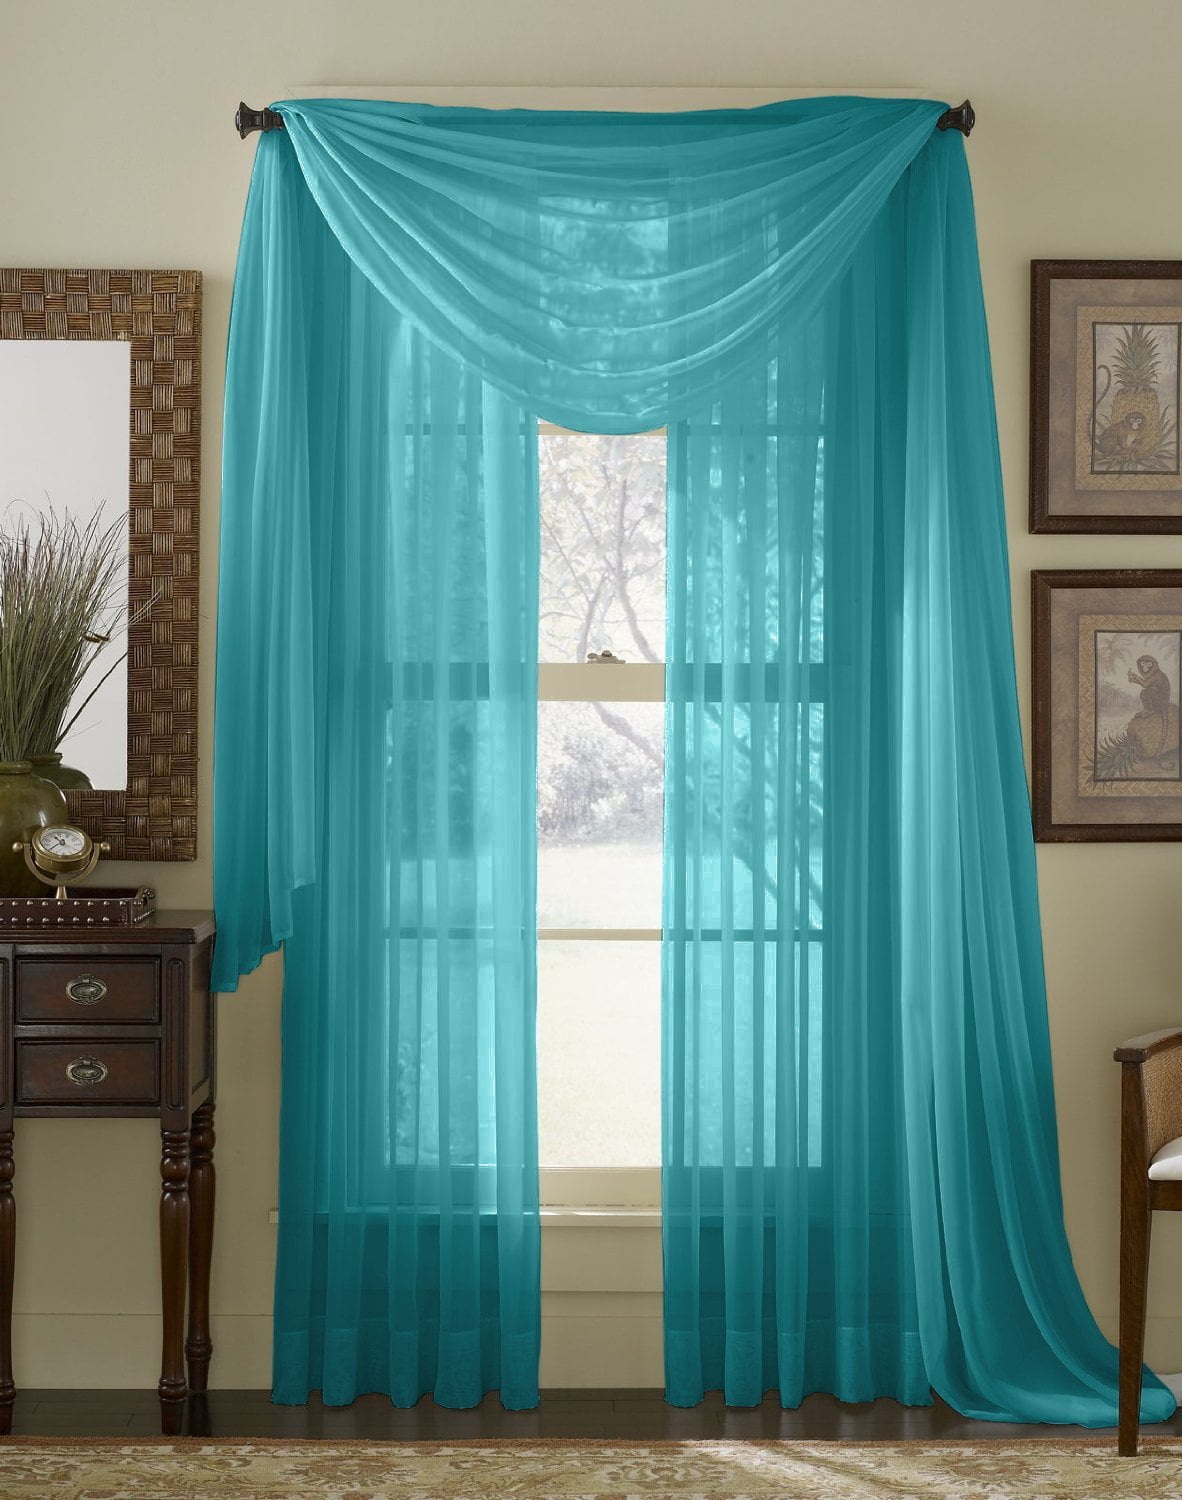 Qutain Linen Solid Viole Sheer Curtain Window Panel Drapes 55 X 84 Inch Many Colors Walmartcom Walmartcom